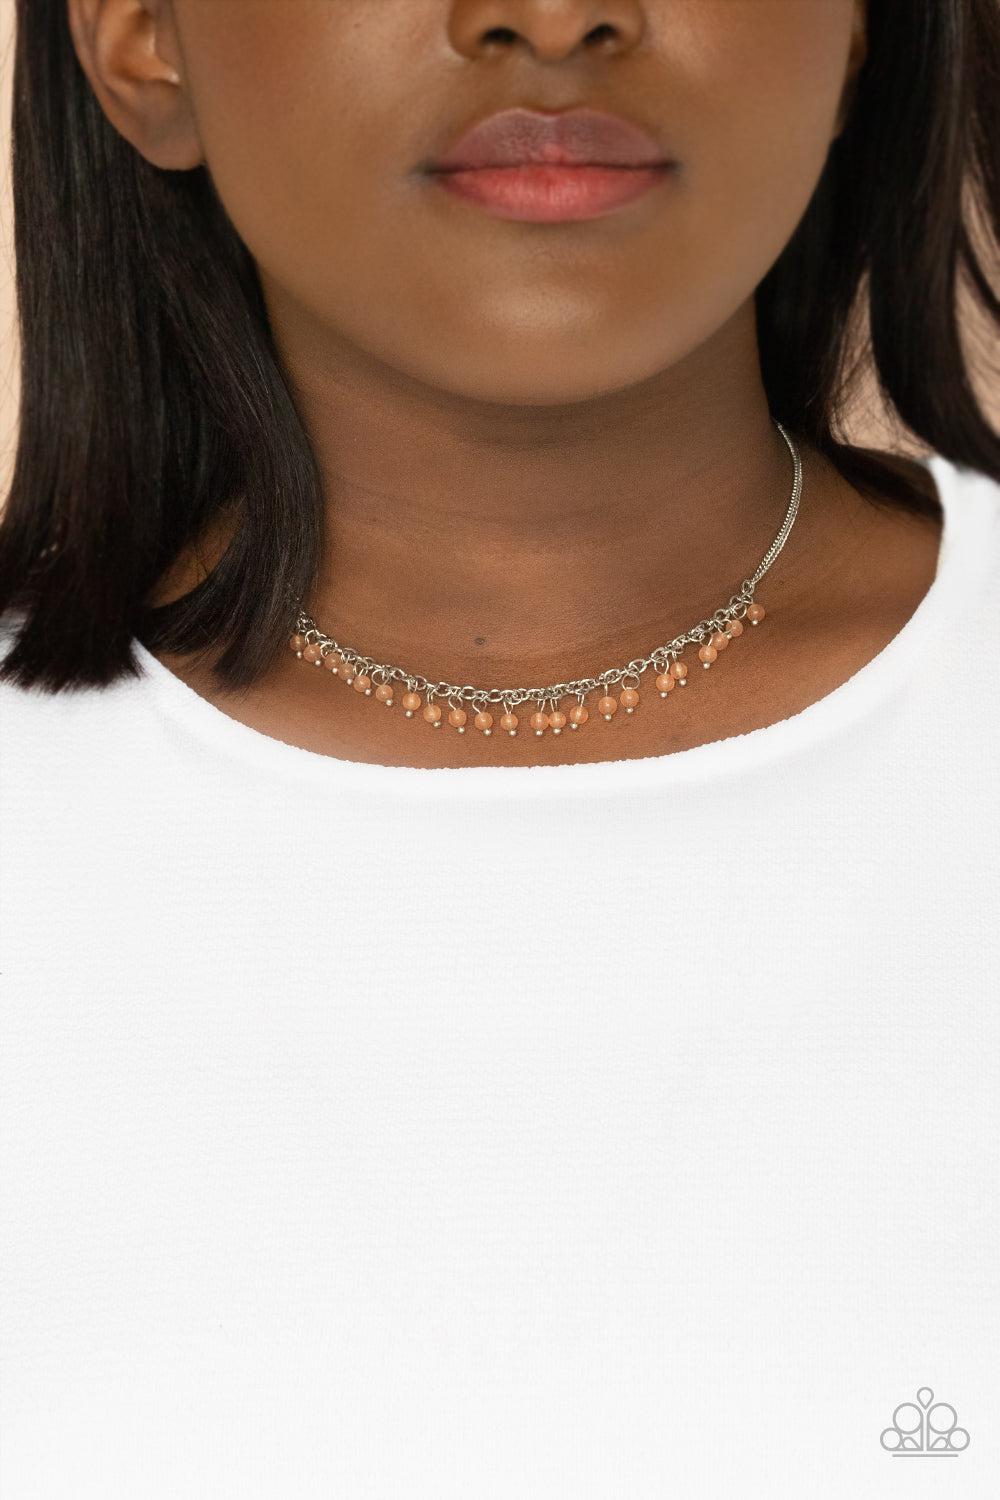 DEW A Double Take Orange Cat&#39;s Eye Stone Necklace - Paparazzi Accessories- on model - CarasShop.com - $5 Jewelry by Cara Jewels